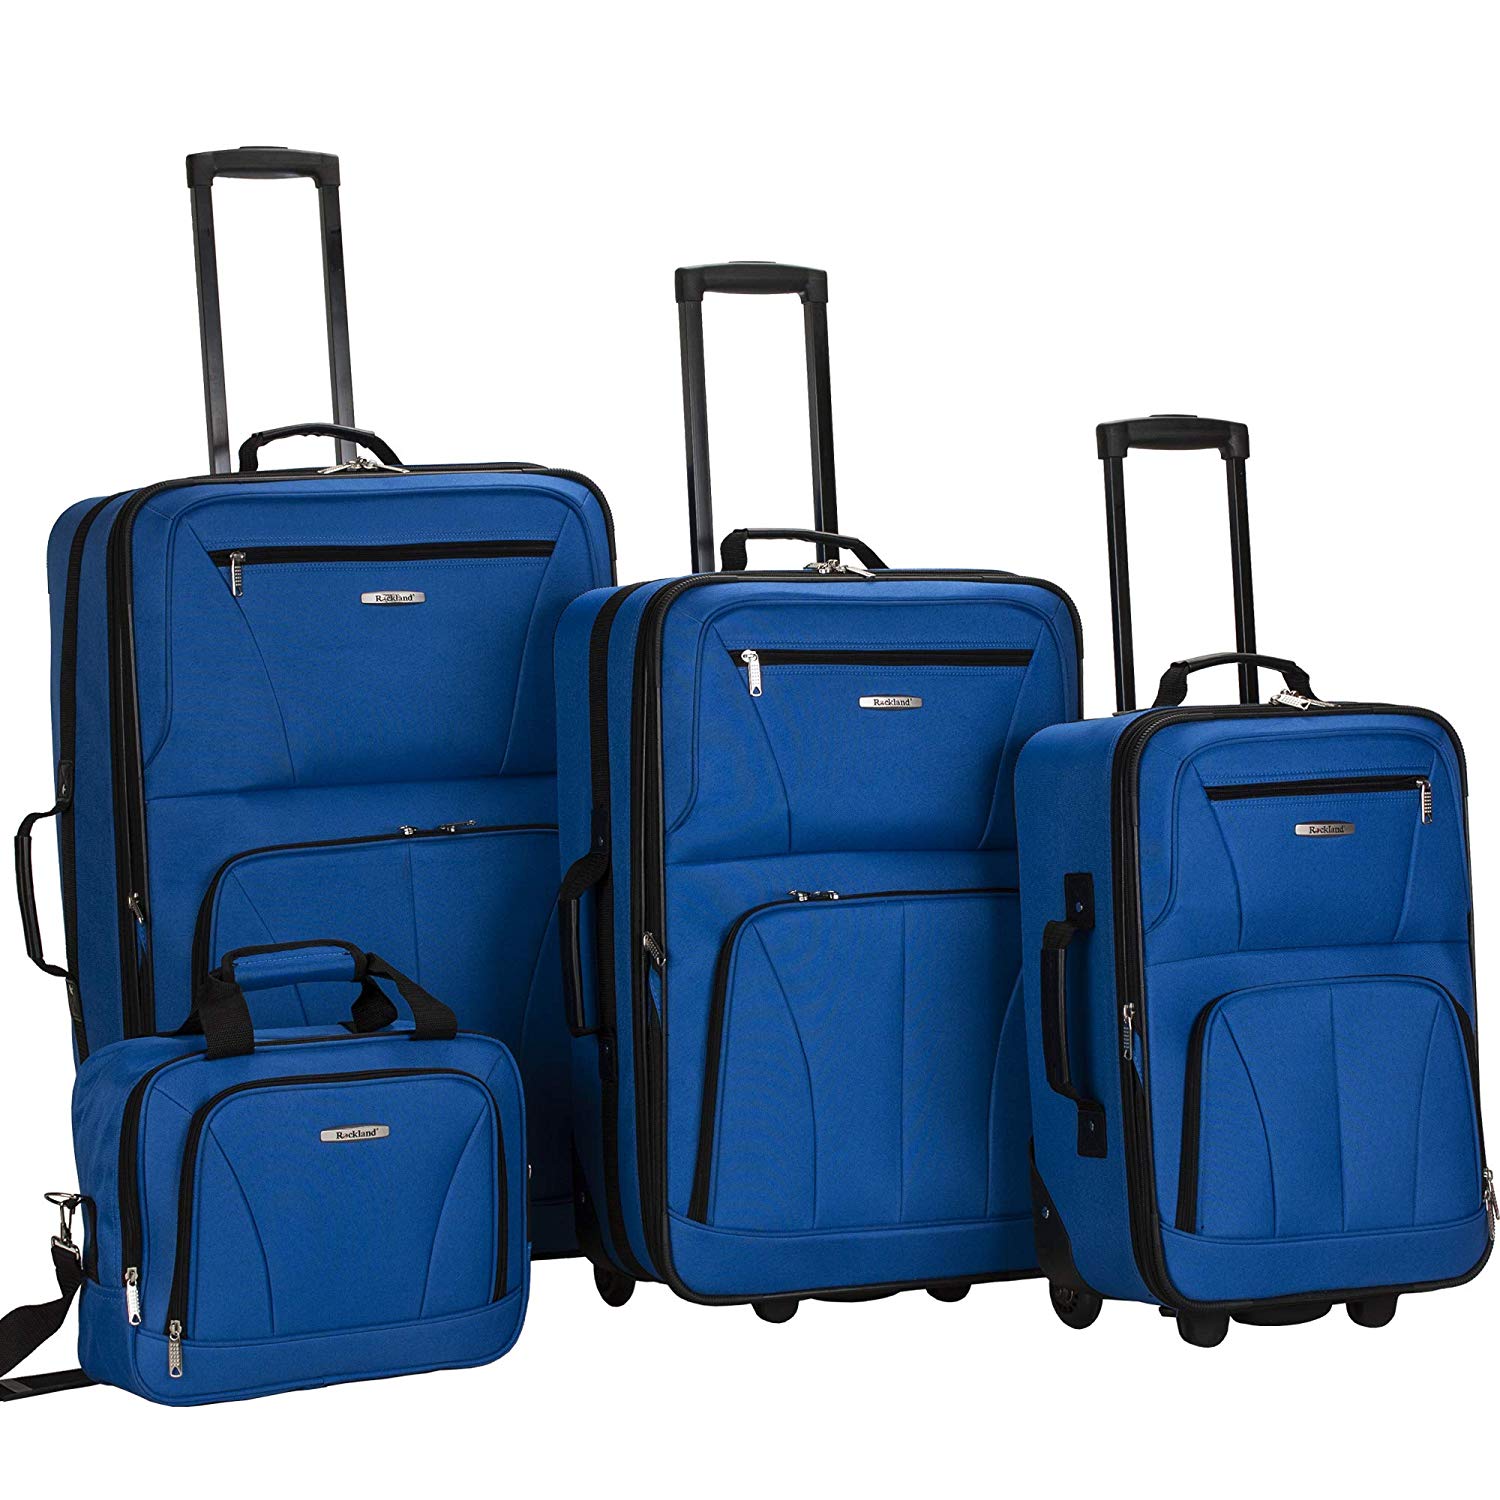 Rockland Expandable Luggage Set, 4-Piece